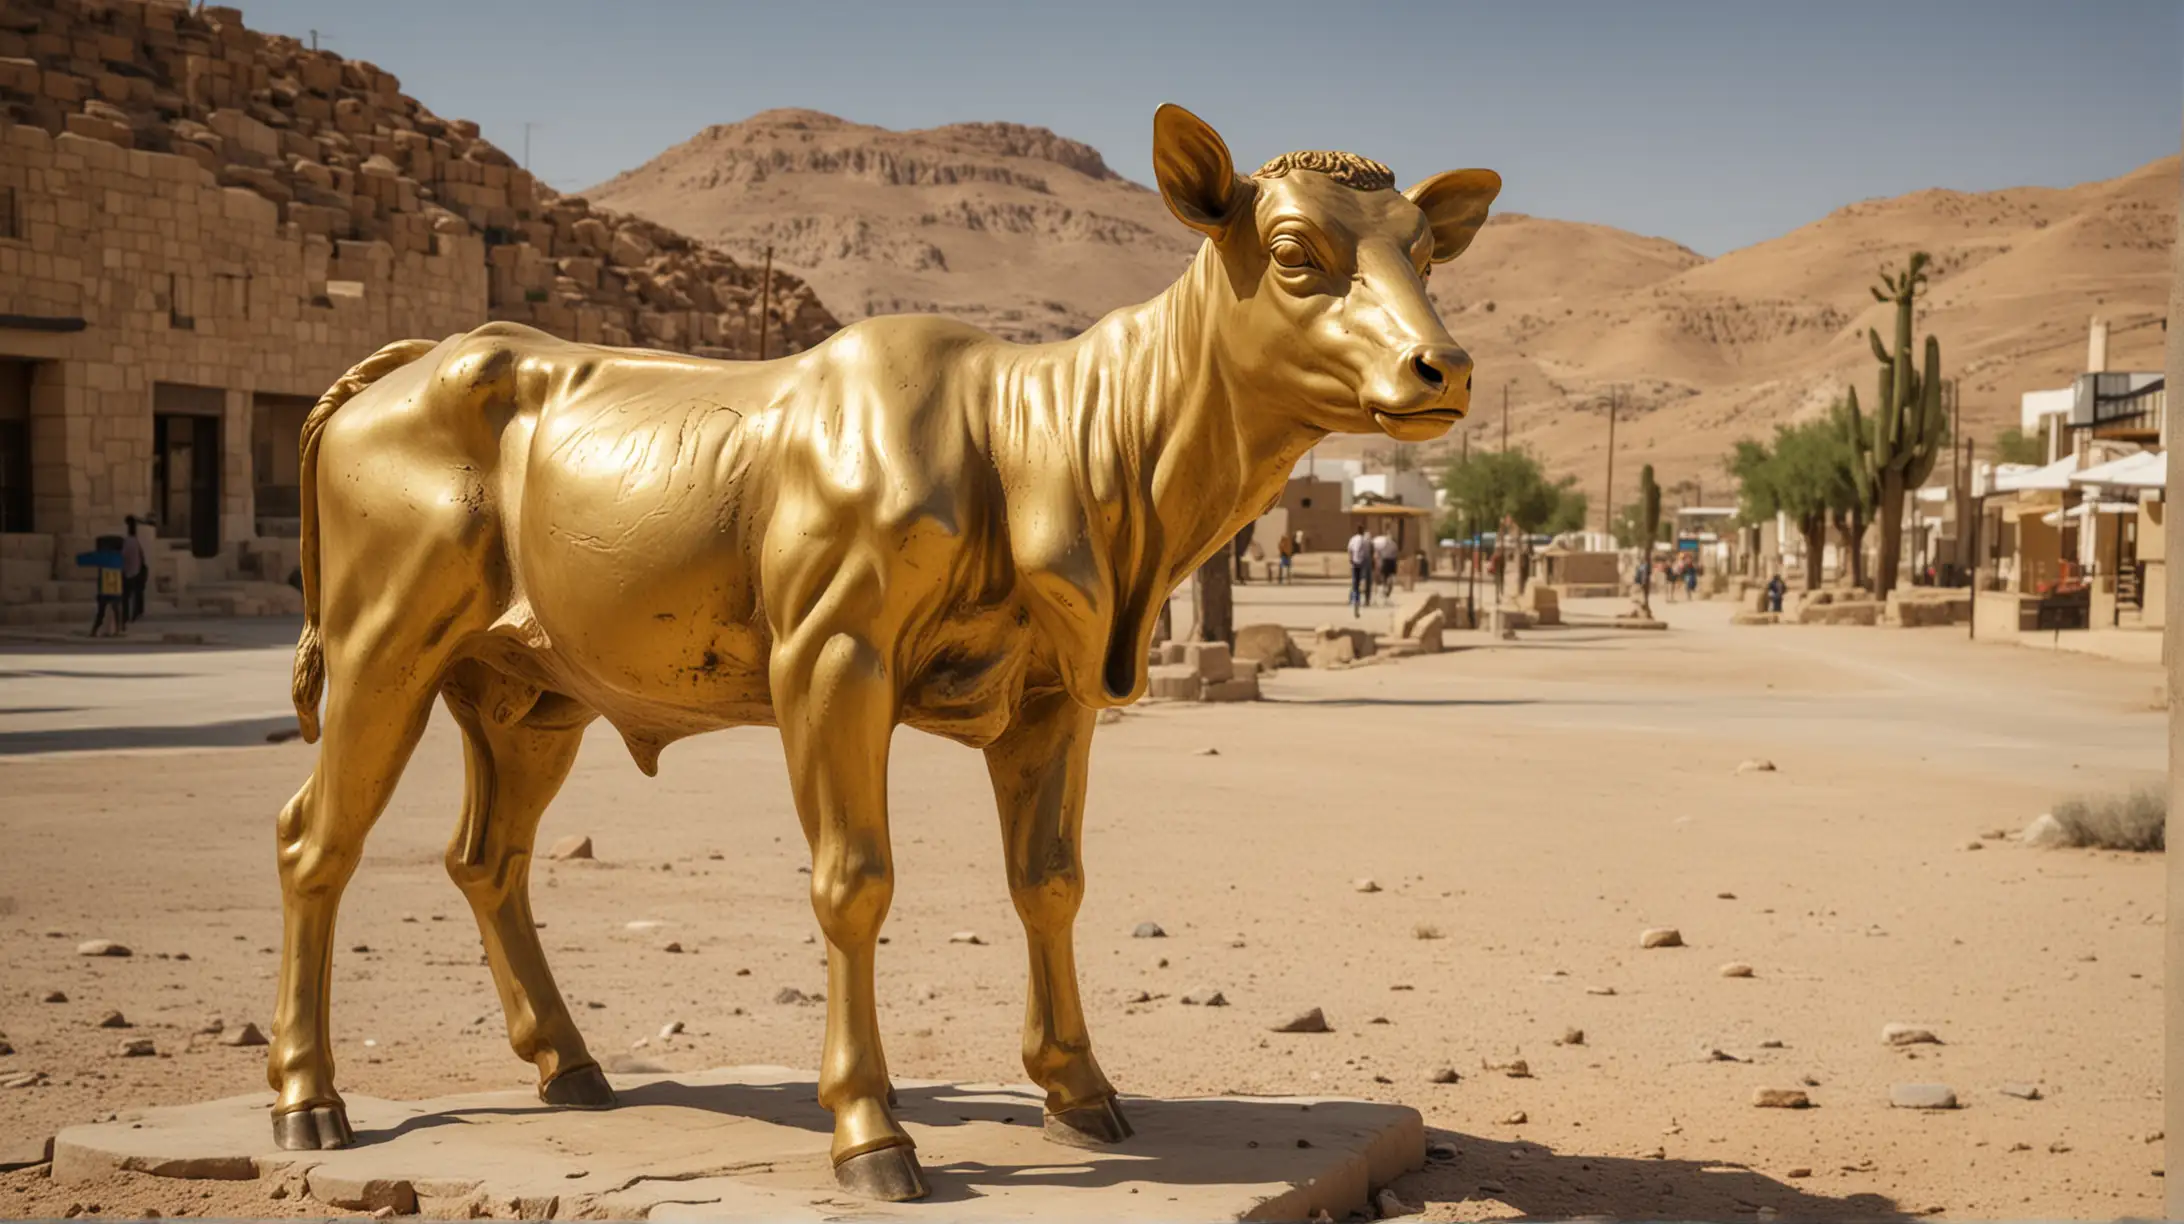 A statue of a gold calf in a desert city. Set during the biblical era of Joshua.